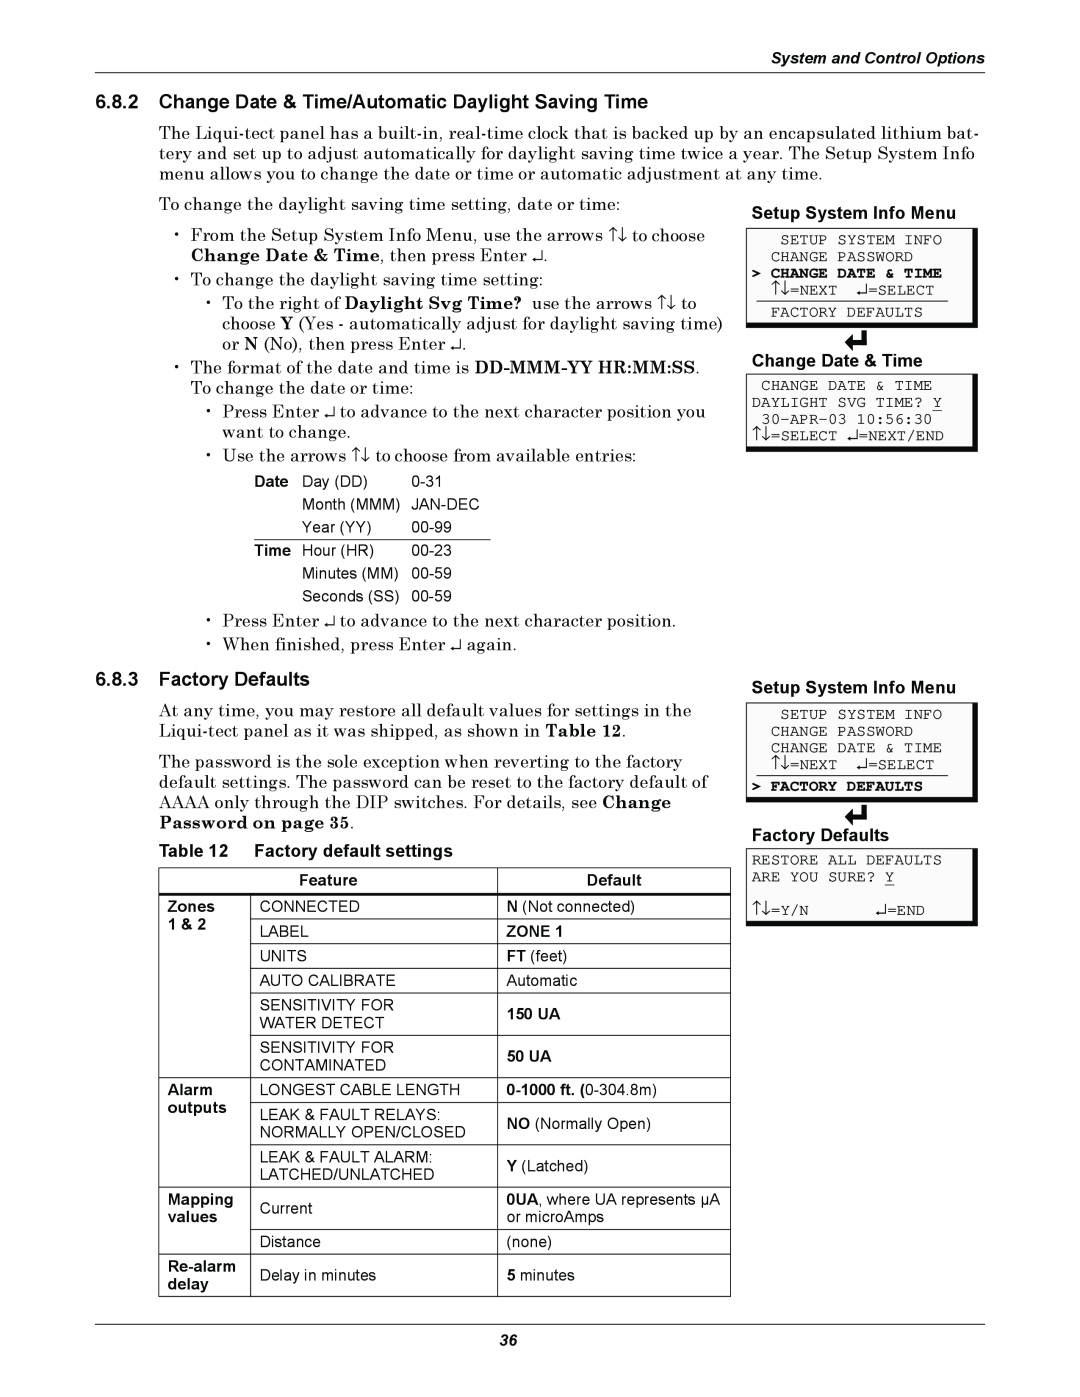 Emerson MC68HC16Z1 user manual 6.8.3Factory Defaults, Setup System Info Menu, Change Date & Time, Factory default settings 